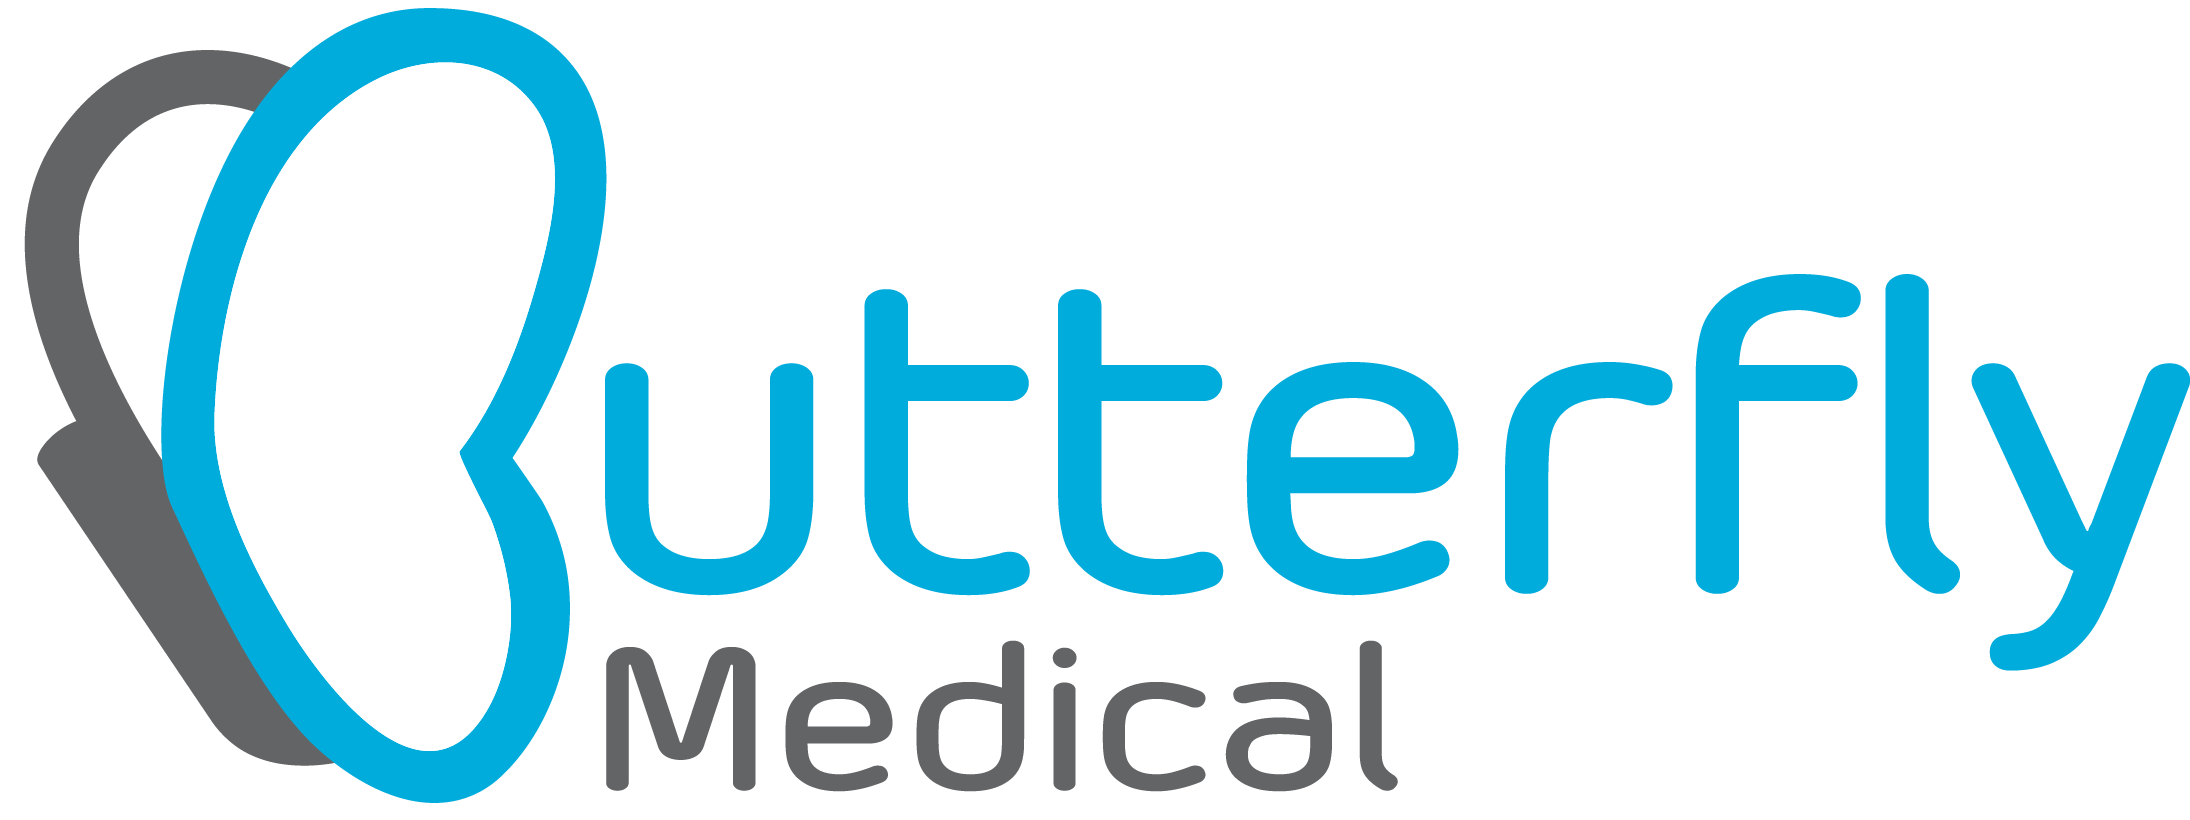 Butterfly Medical Ltd.